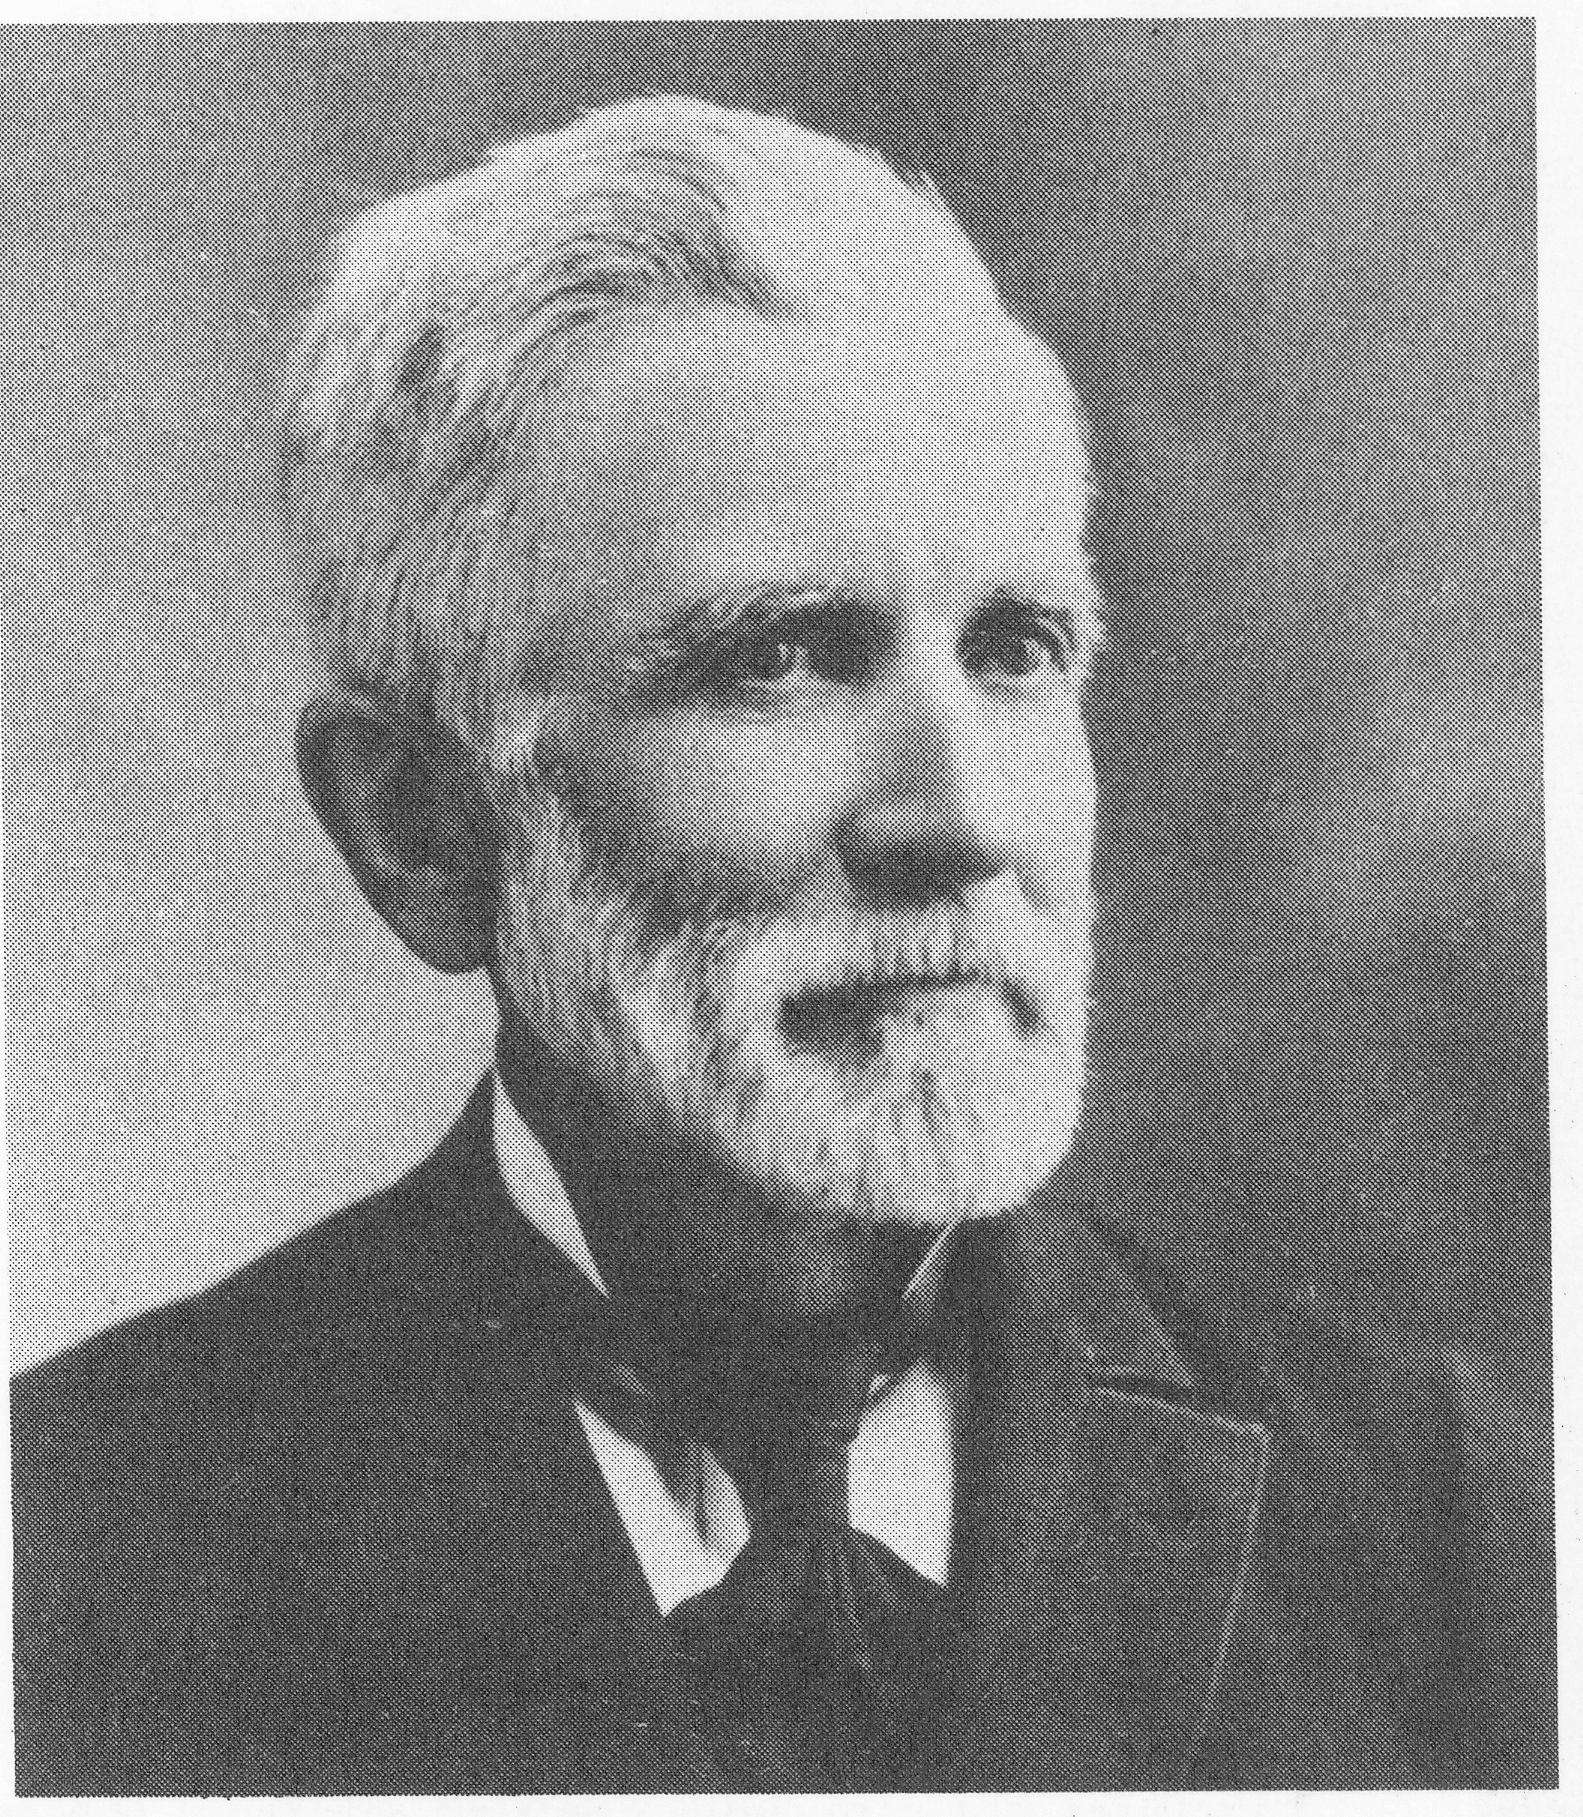 Portrait of John Swett as an older man